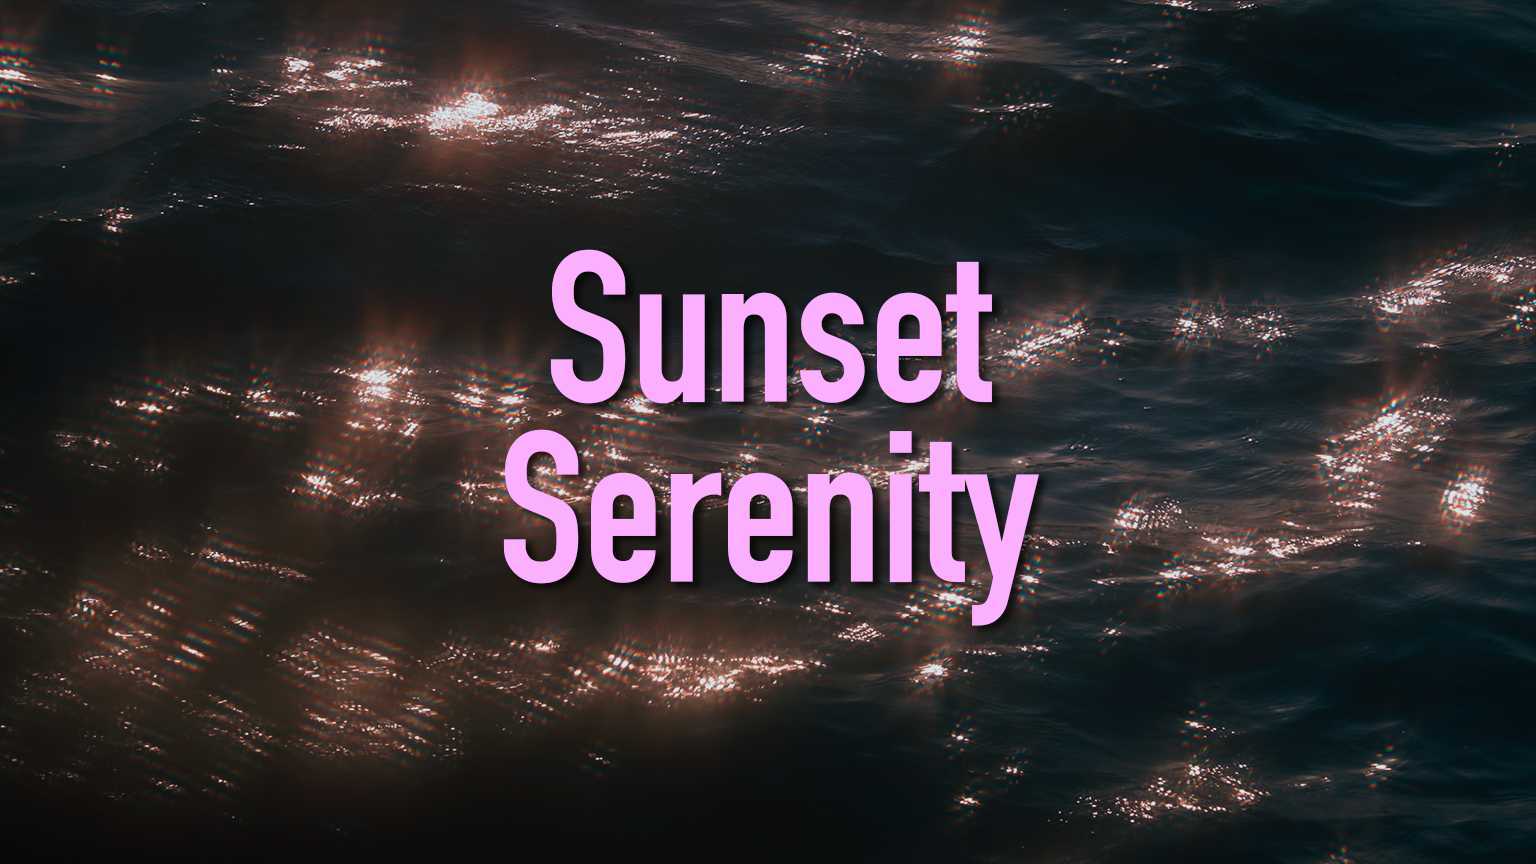 Sunset Serenity / 在深圳海边的公园做一场梦 治愈电影感短片